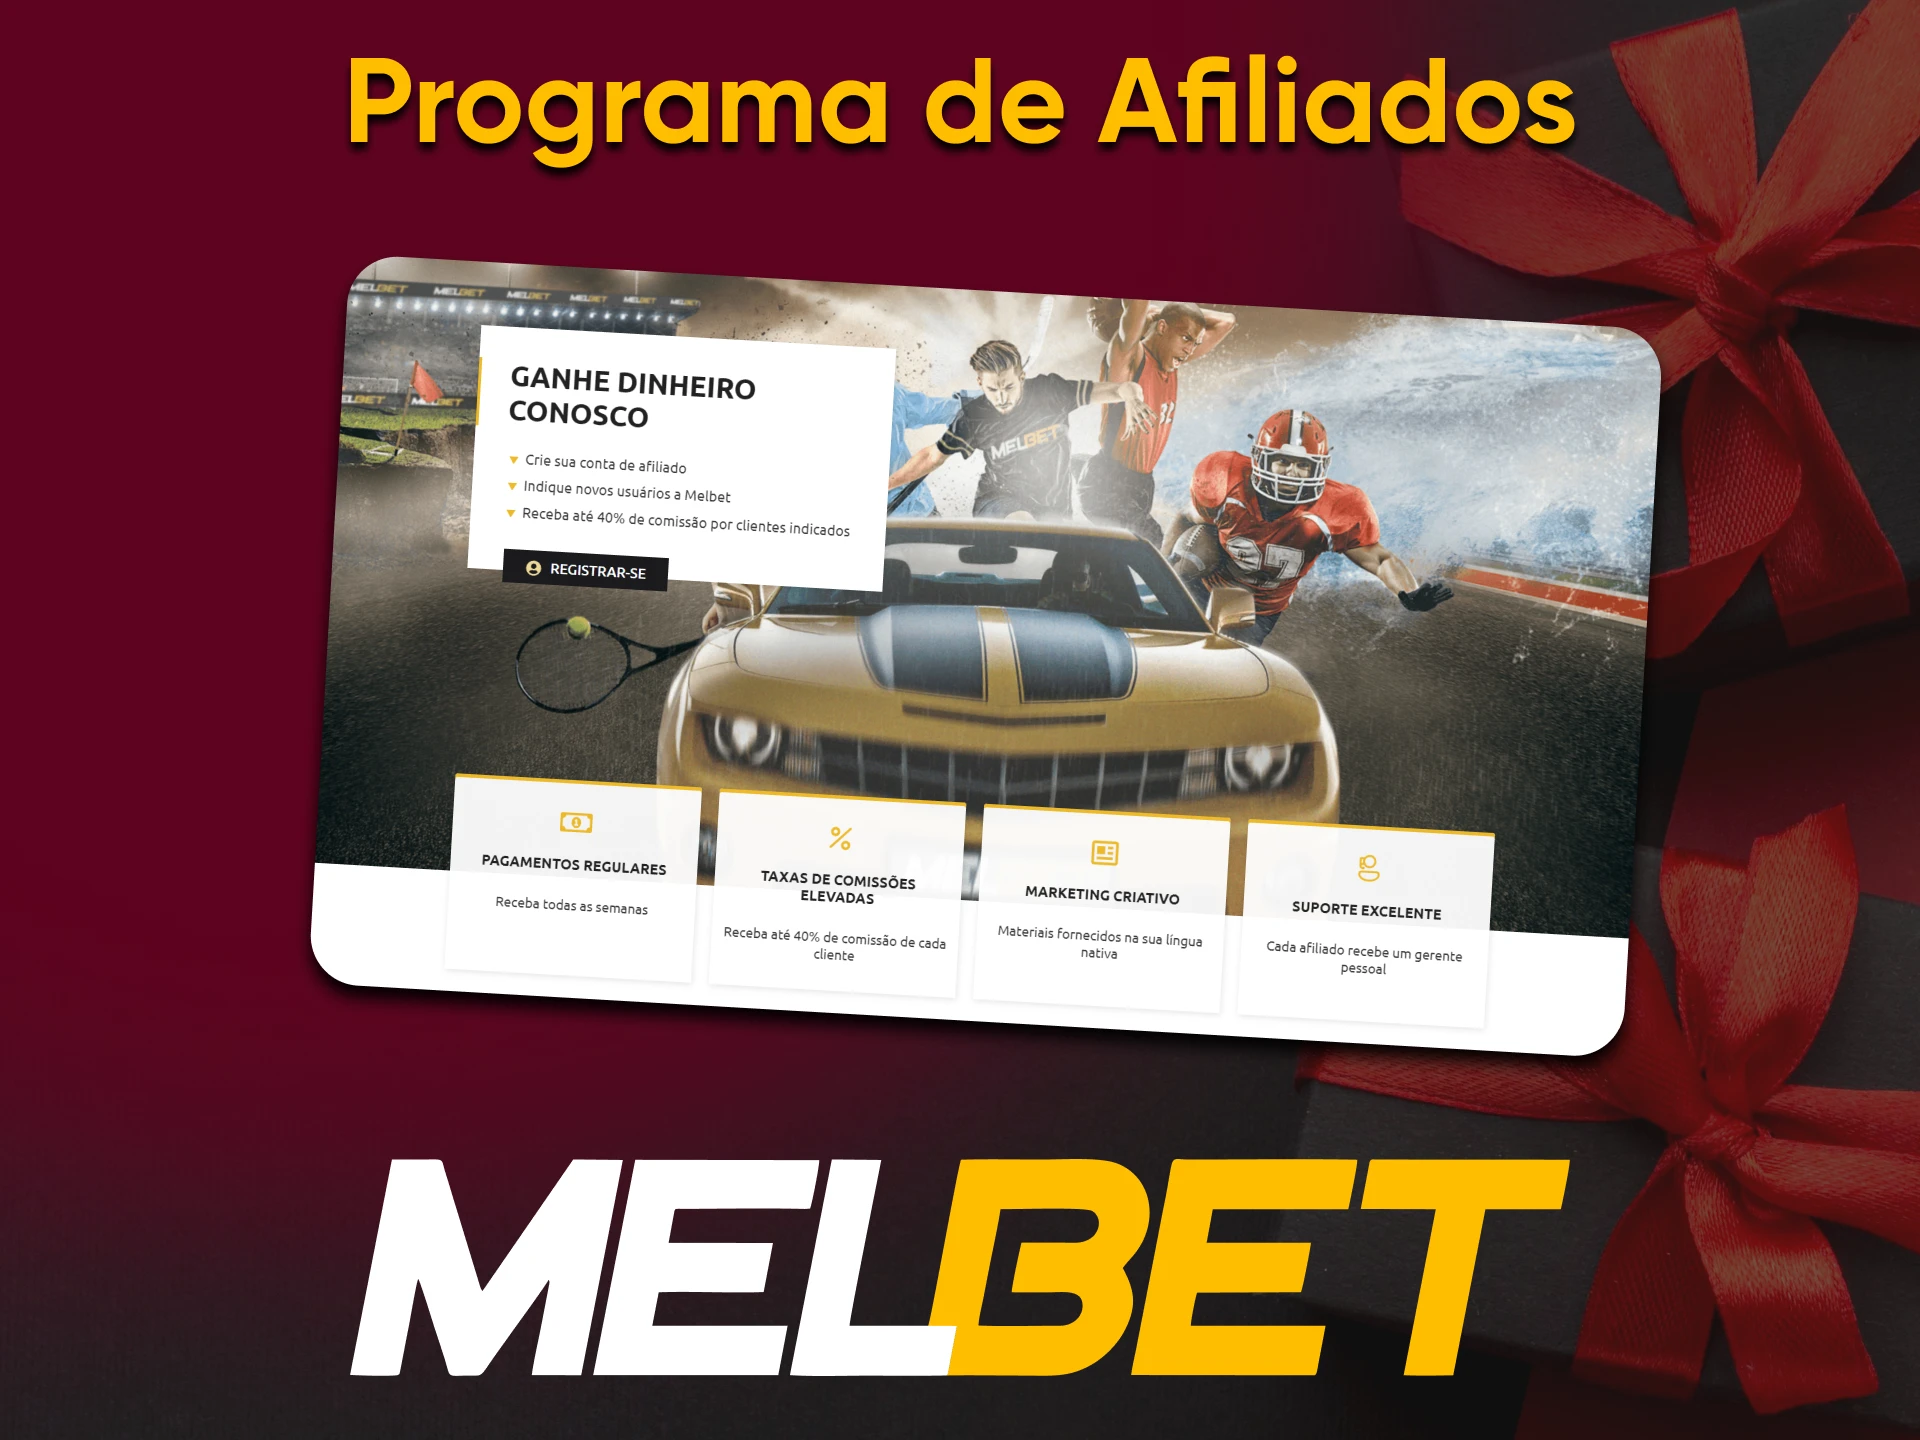 Para aumentar o seu lucro no mercado de apostas, junte-se ao programa de afiliados da Melbet.